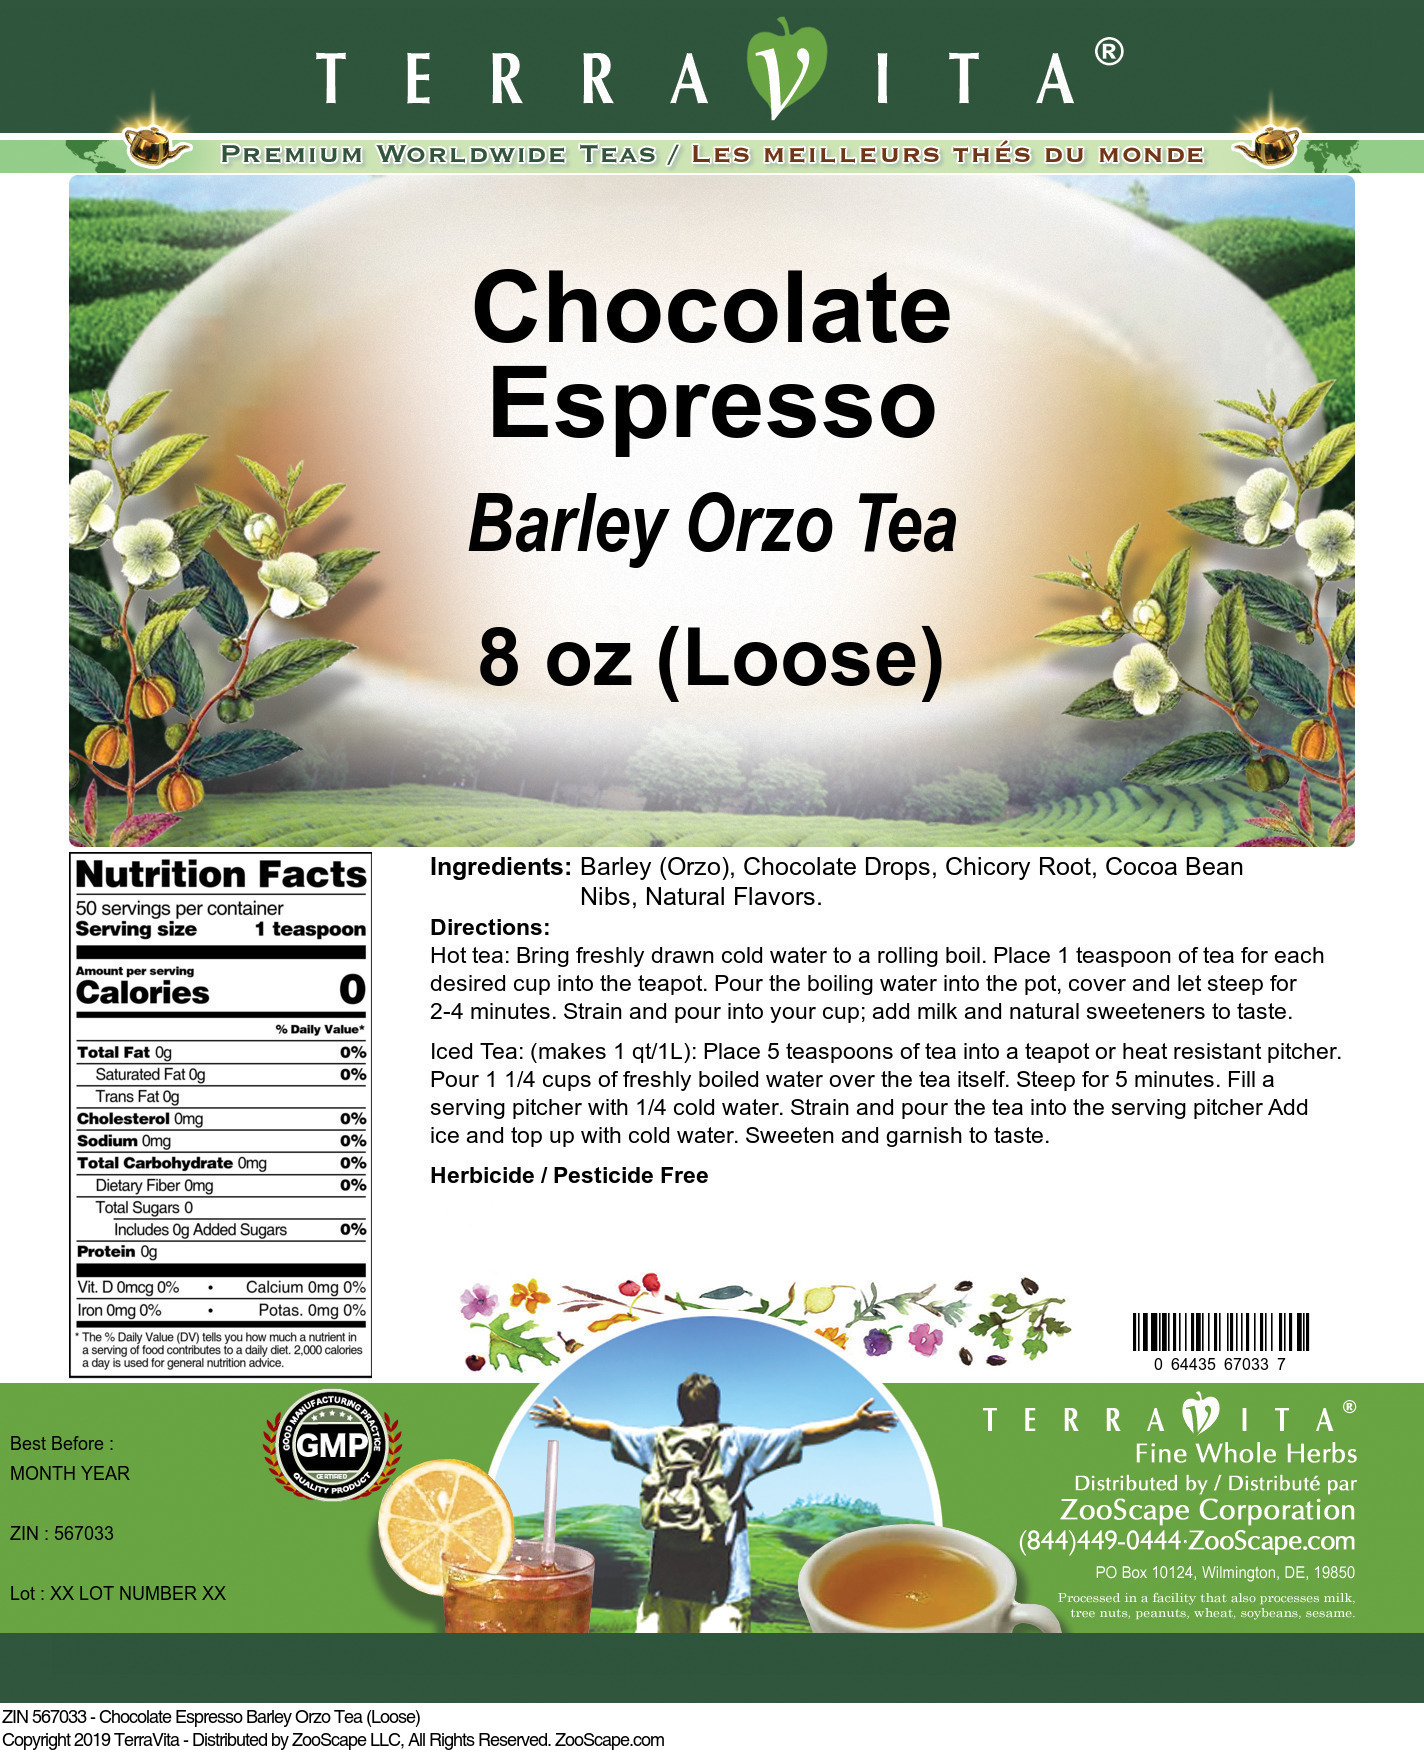 Chocolate Espresso Barley Orzo Tea (Loose) - Label